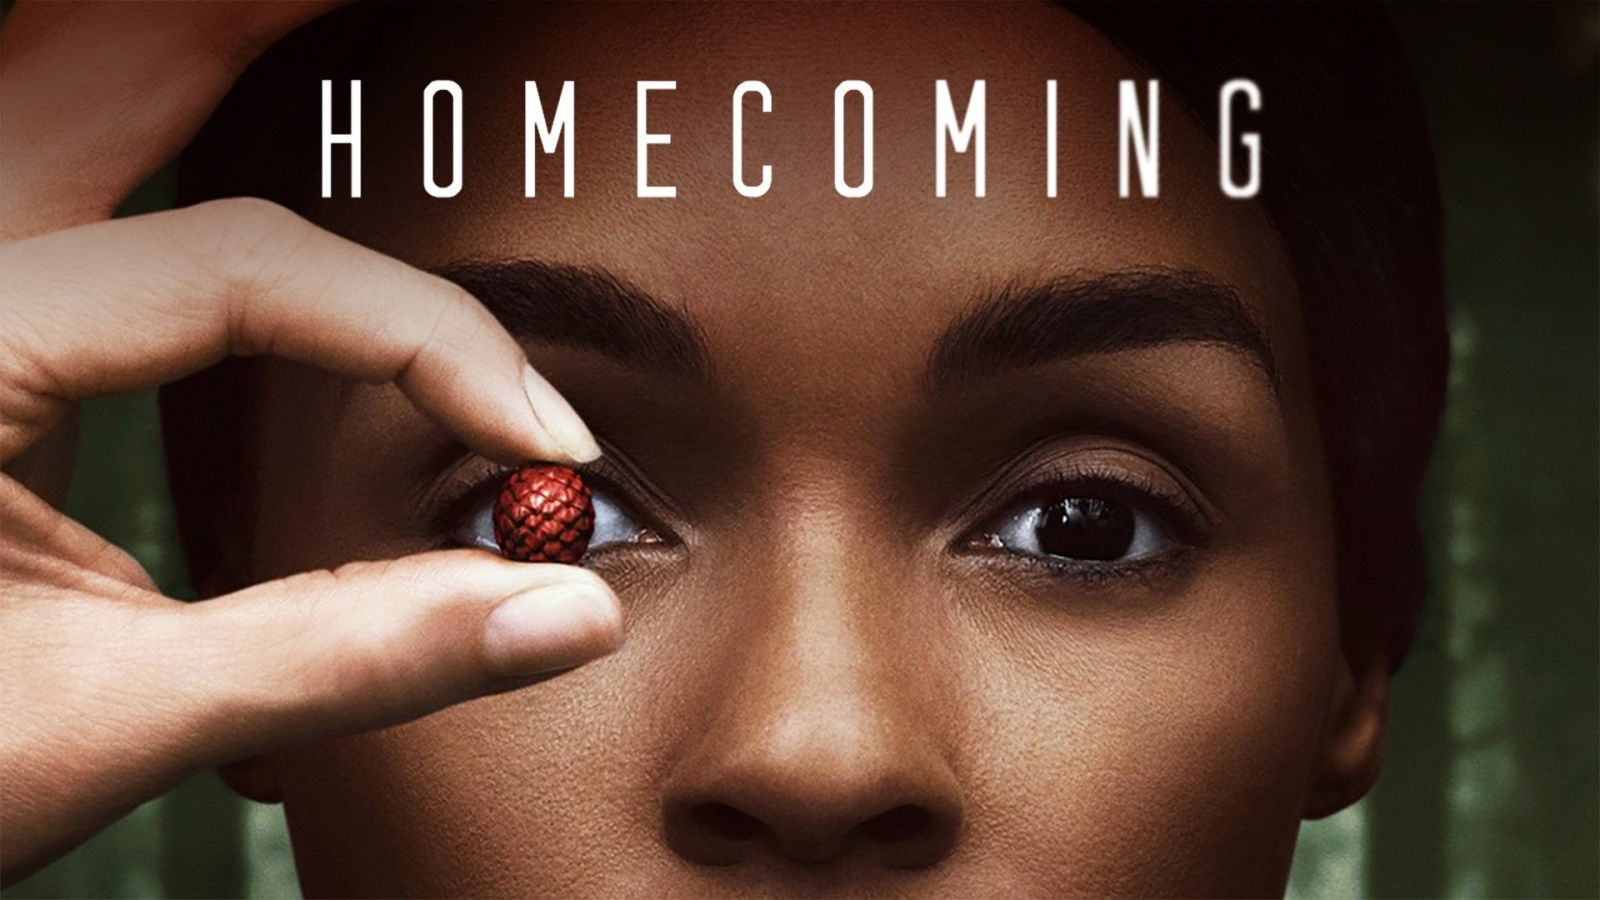 Homecoming (phần 2) - Homecoming (season 2)